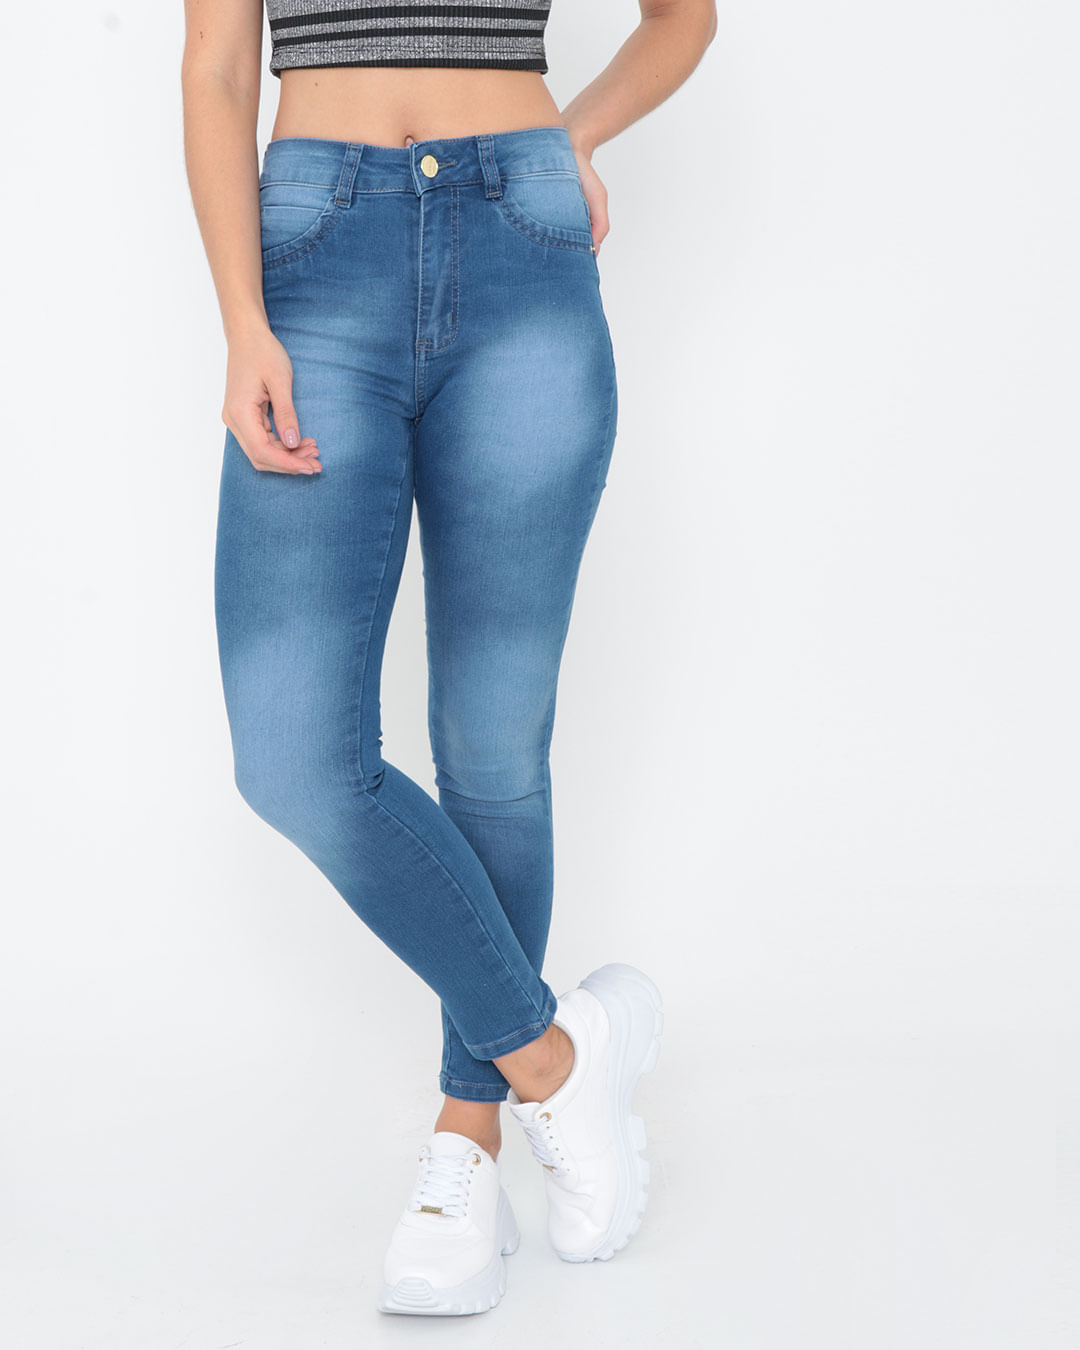 Calca-8226-Jeans-Snk-Croppedfem-Ad---Blue-Jeans-Claro